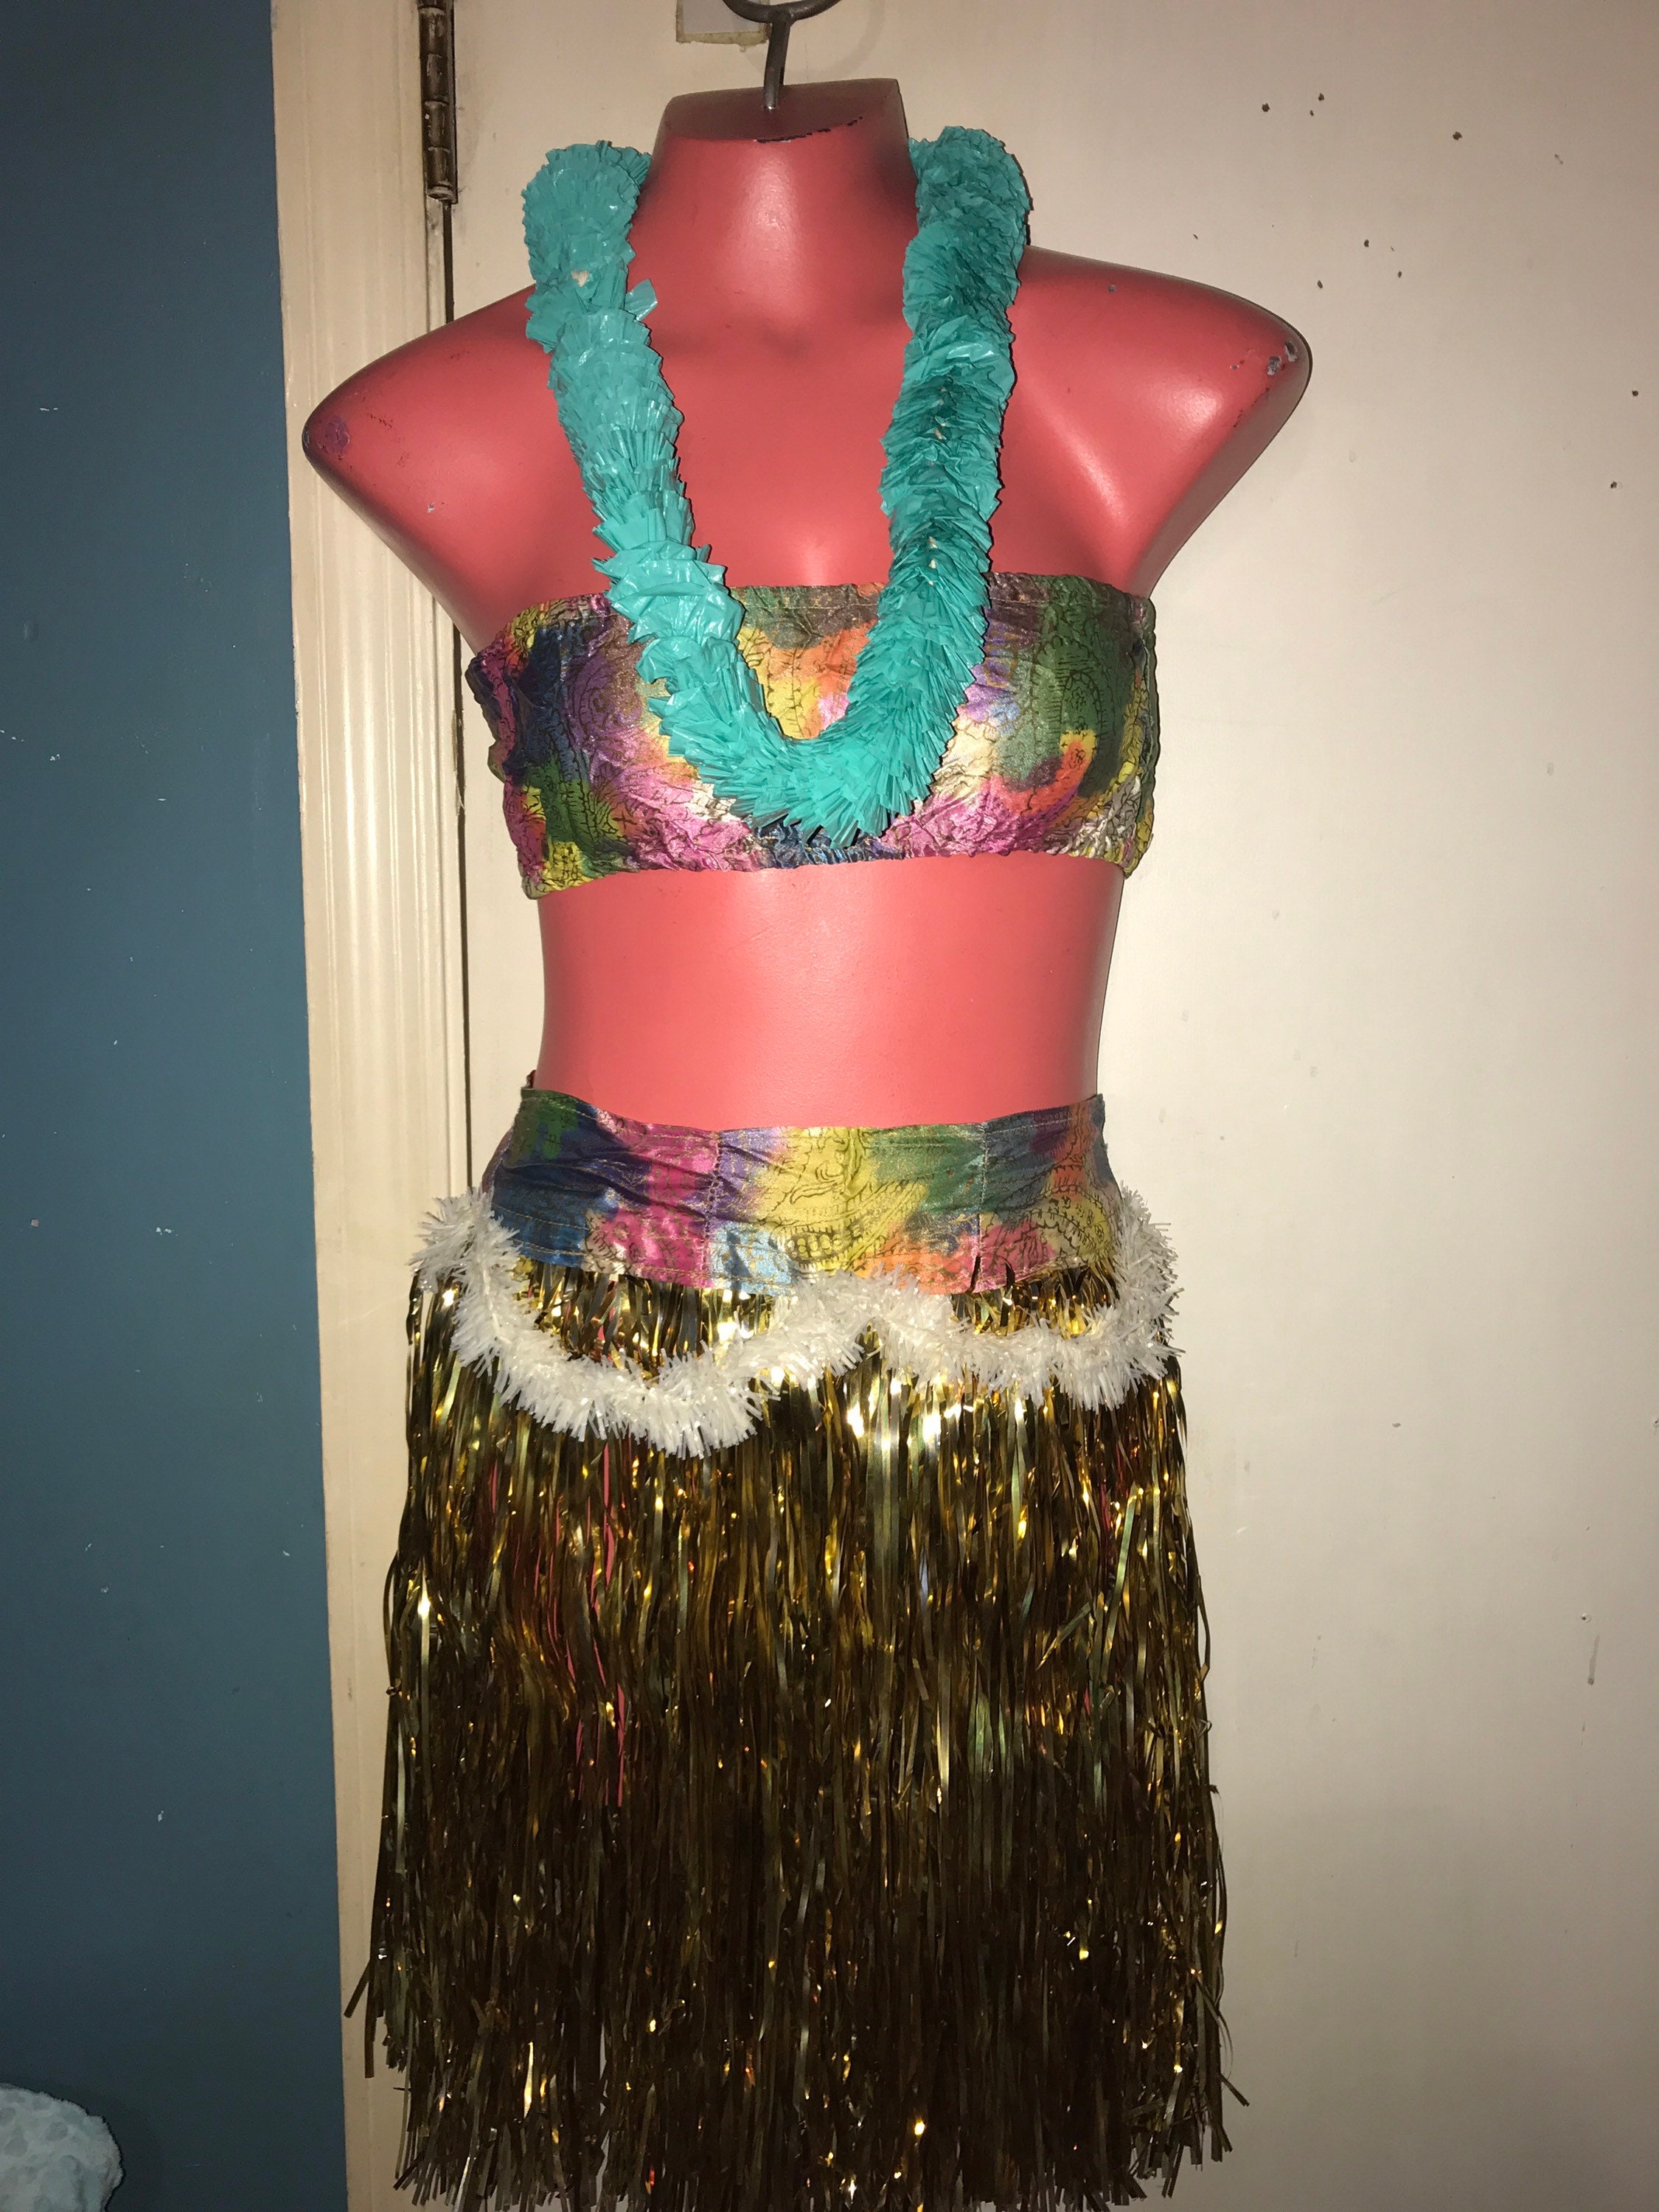 Hula Dancer Costume photo